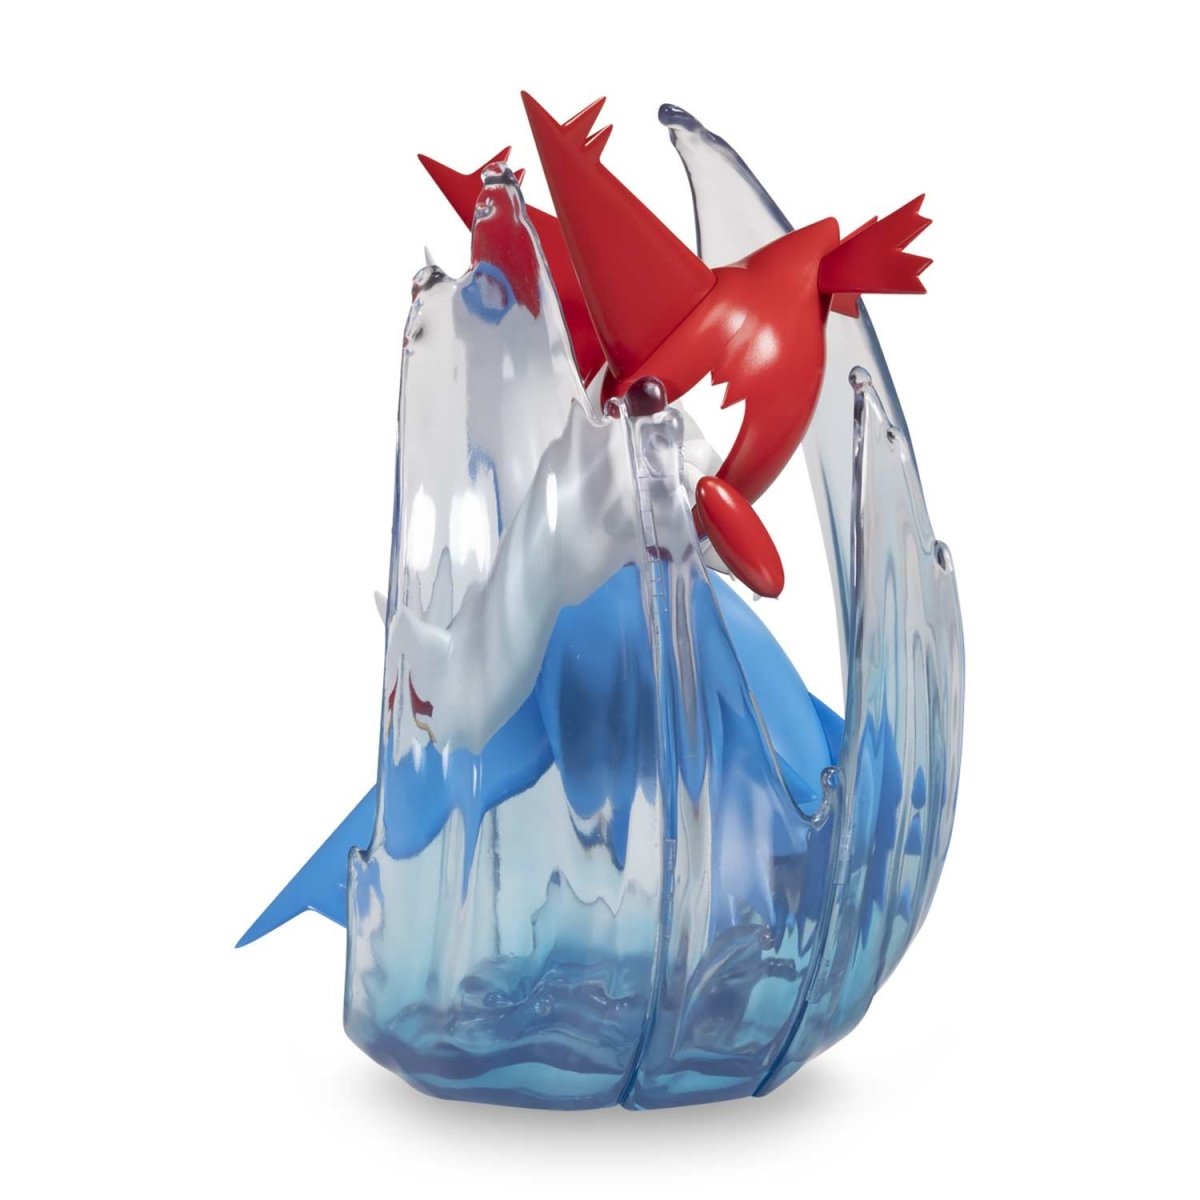 Pokémon Kotobukiya Latias &amp; Latios Figure-Pokemon Centre-Ace Cards &amp; Collectibles